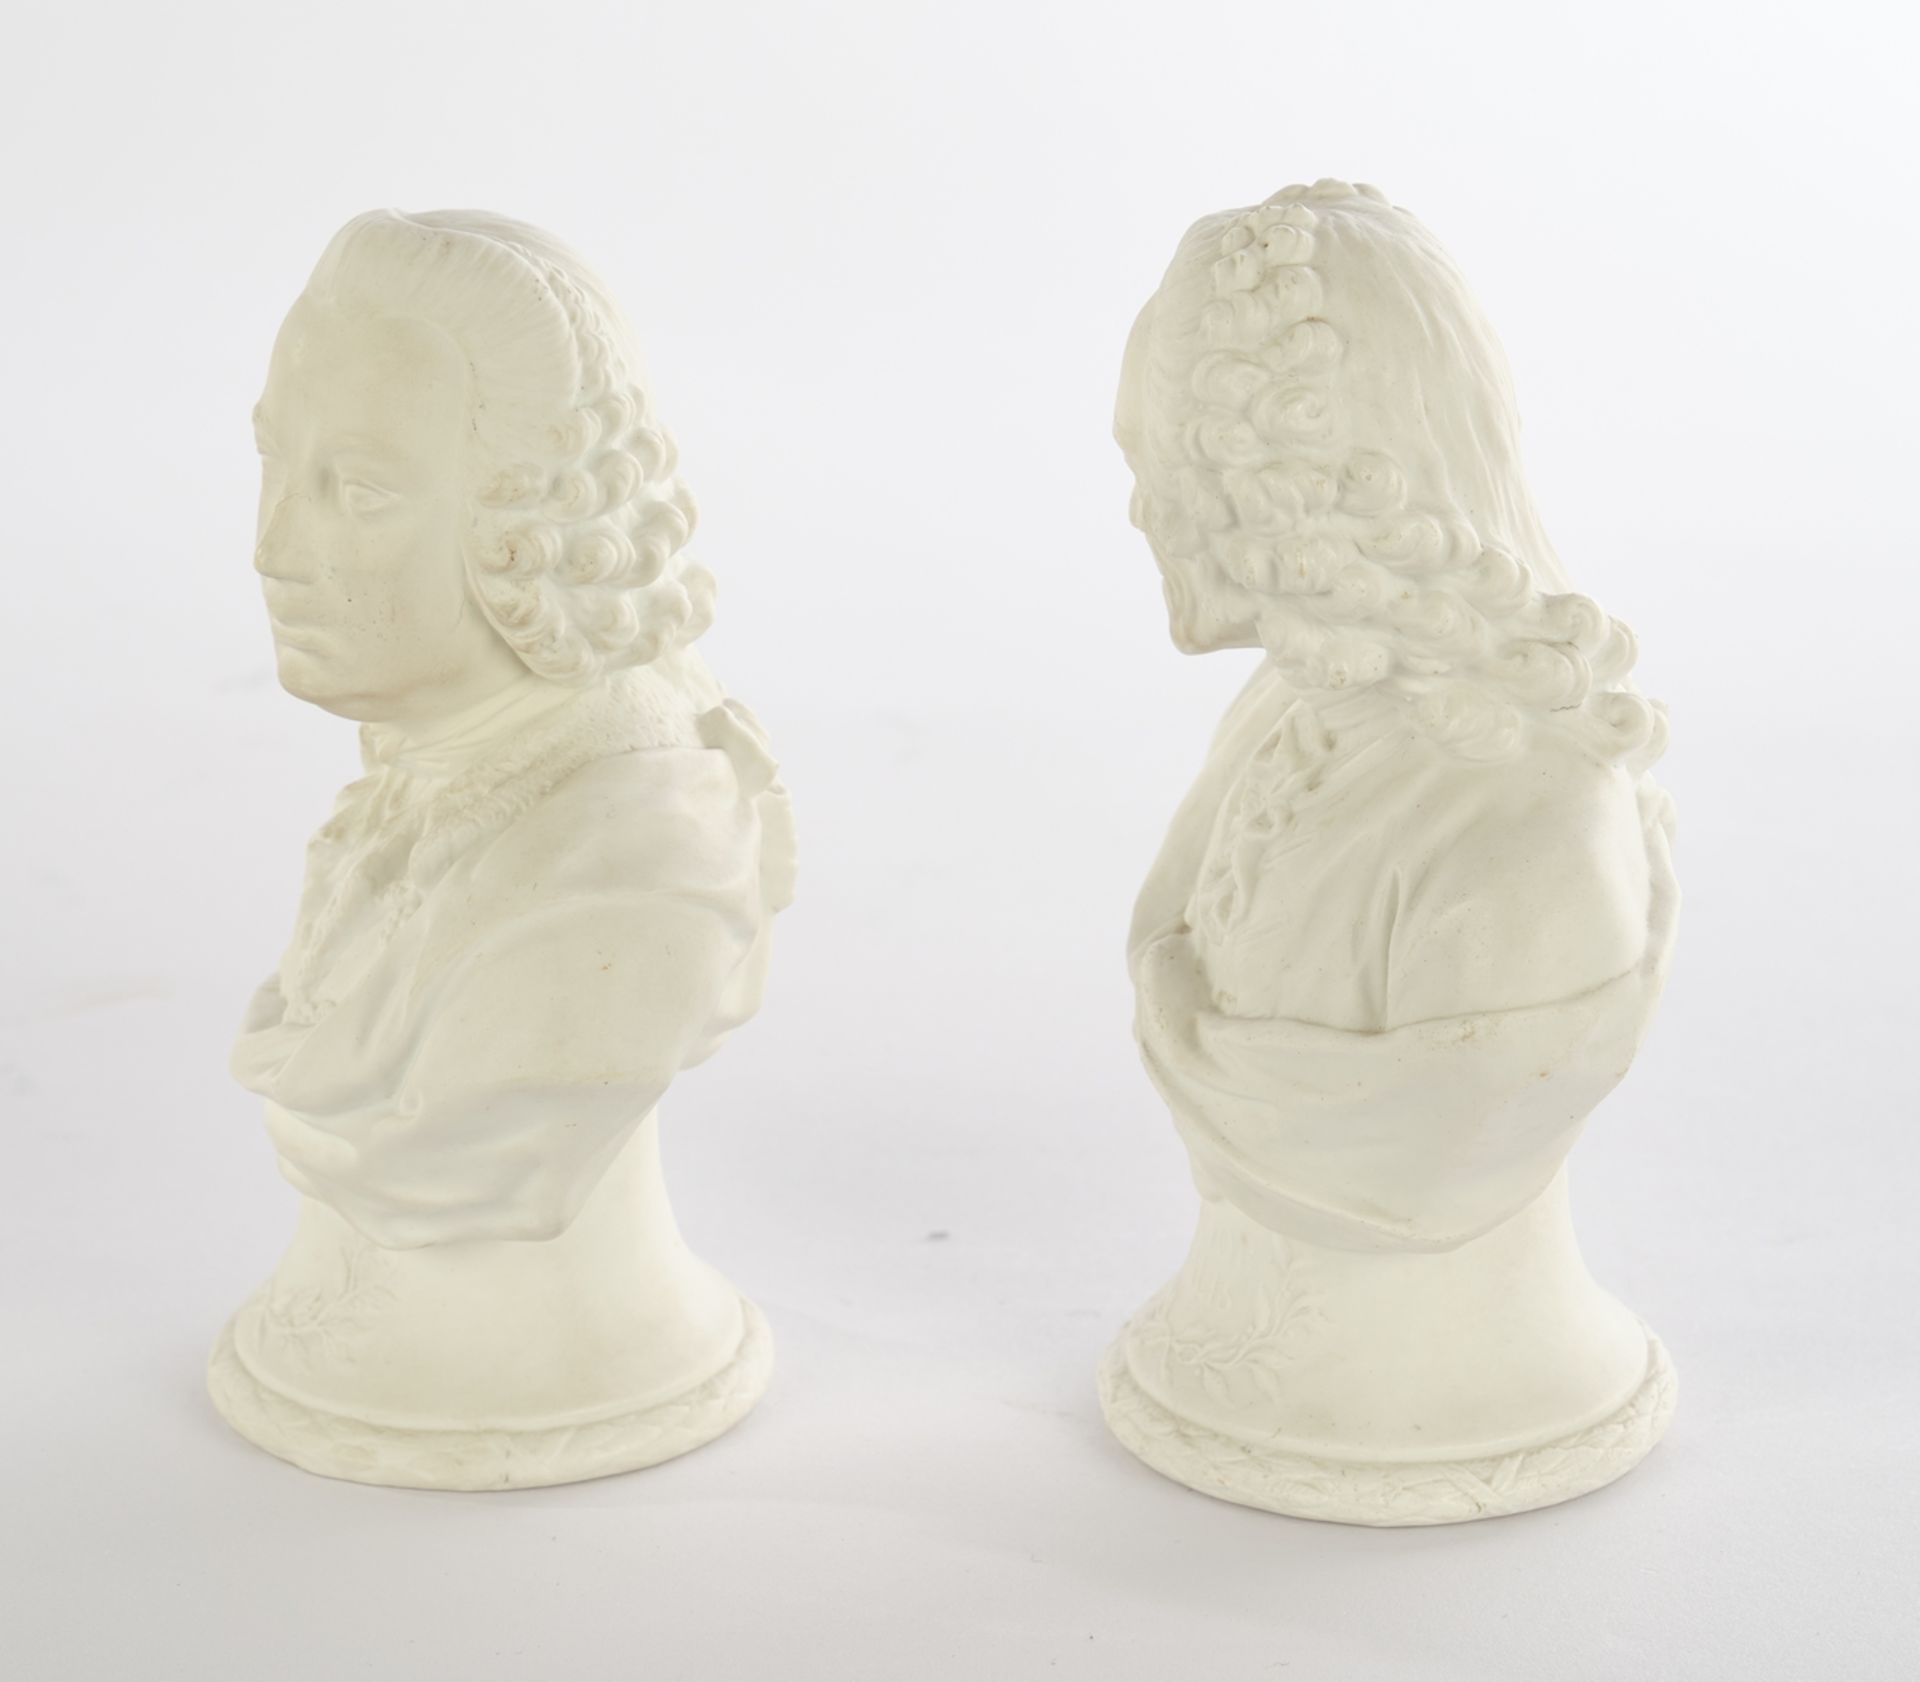 2 busts, "Marquis d'Argens", , "Marquis d'Argens", "Voltaire", KPM Berlin, after 1775 (d'Argens) an - Image 2 of 6